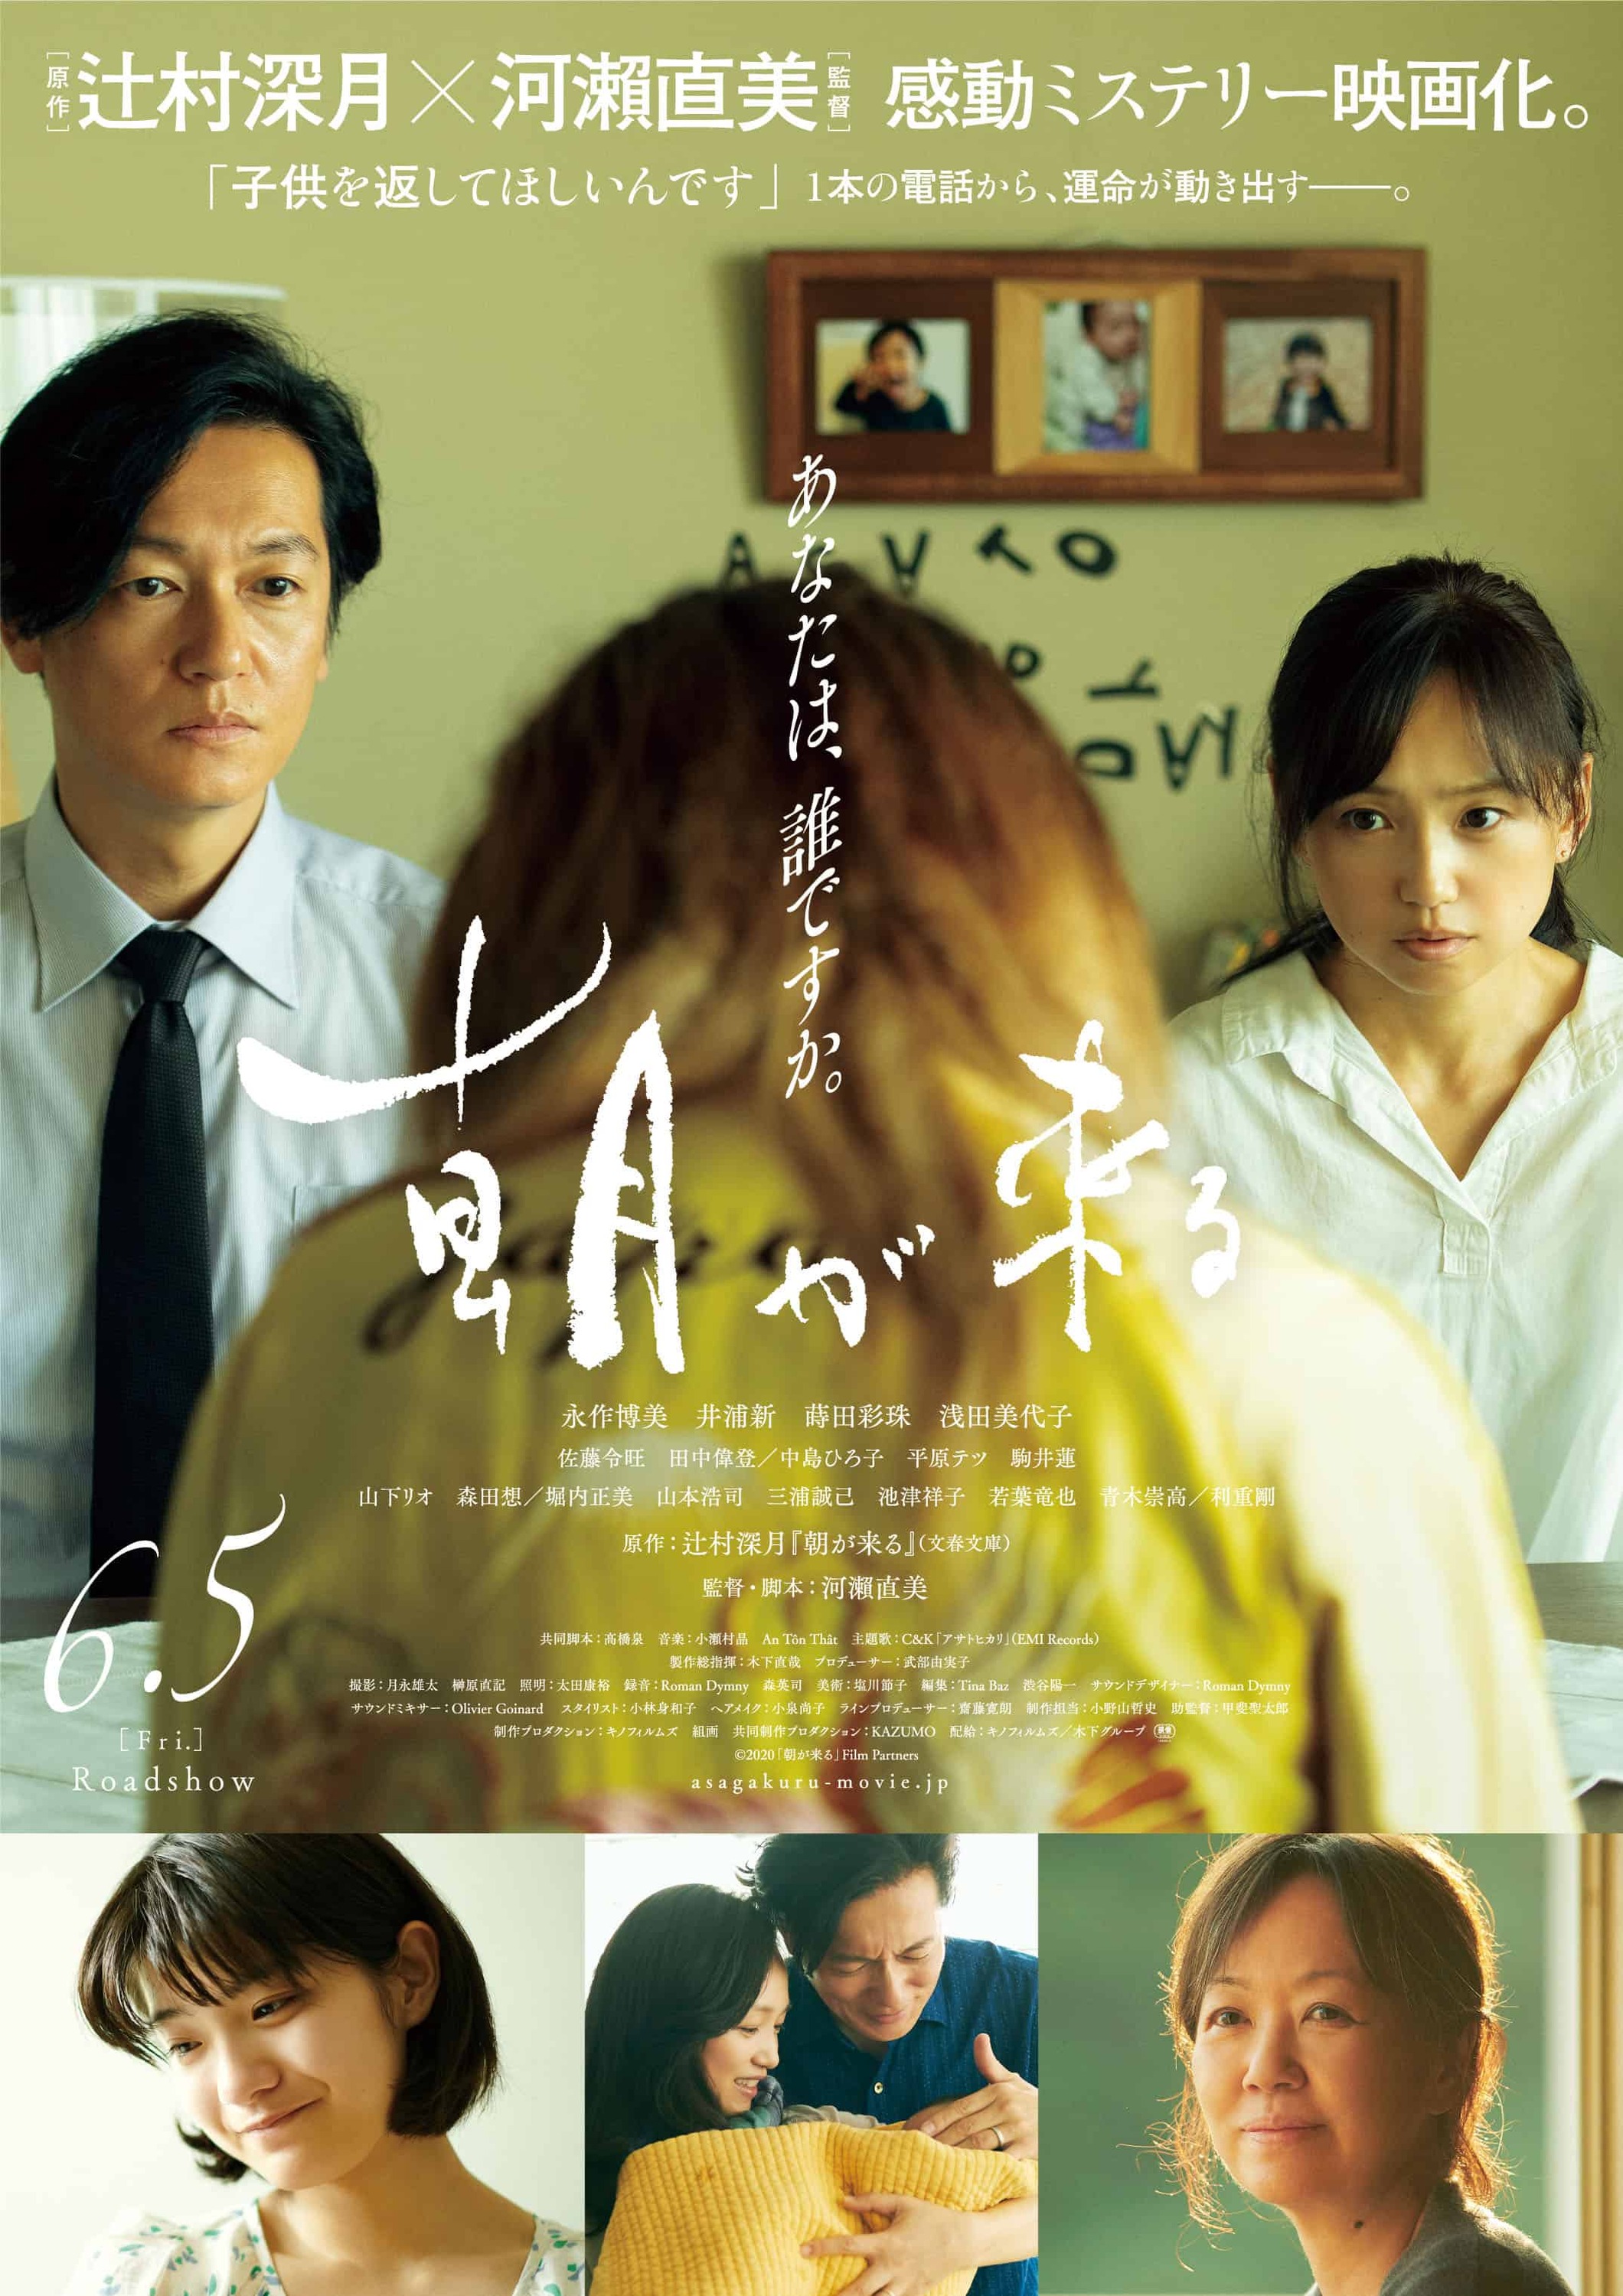 Mega Sized Movie Poster Image for Asa ga Kuru 